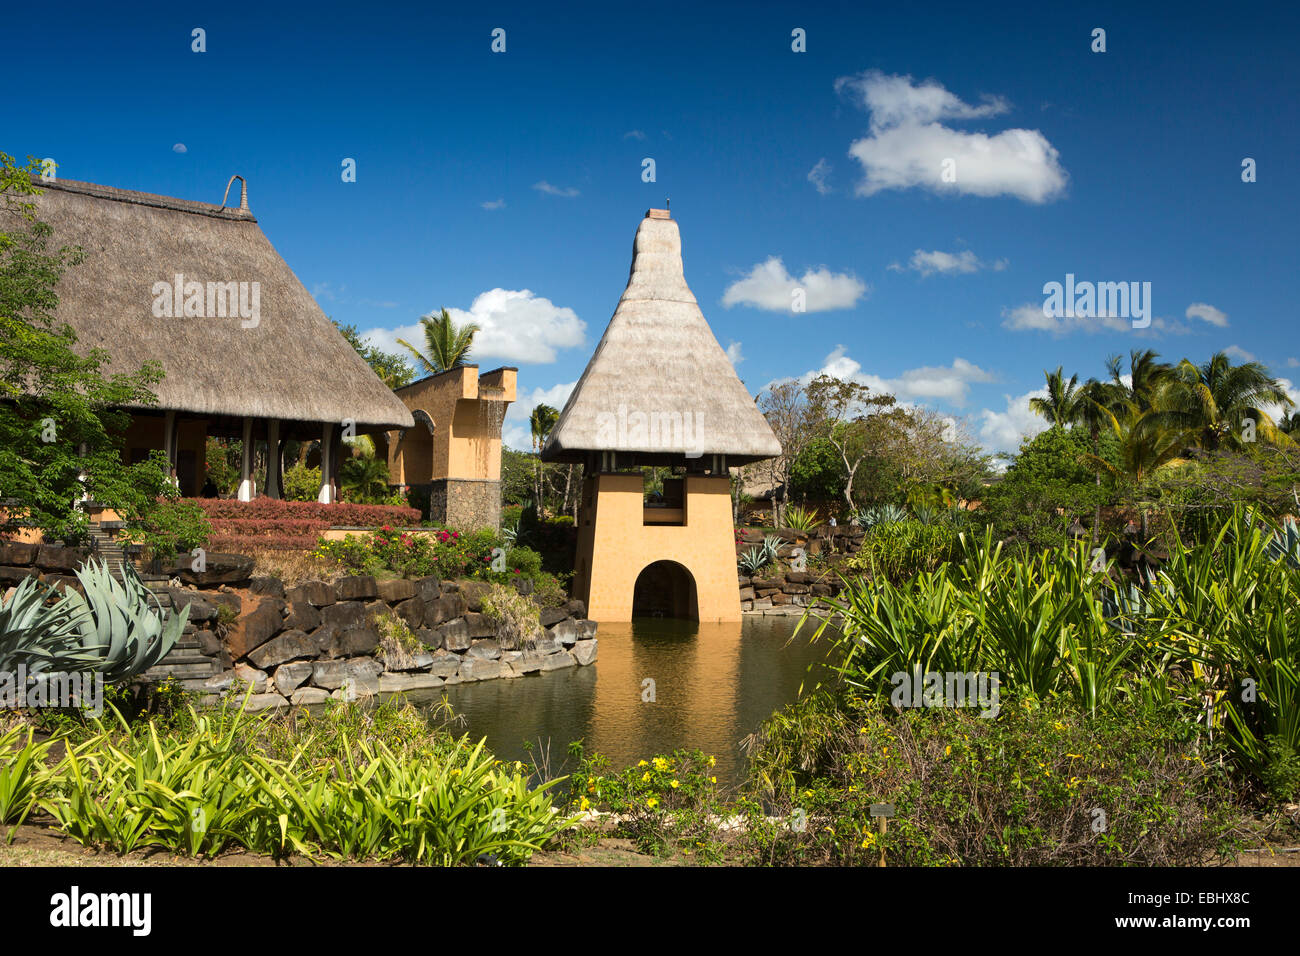 Mauritius, Pointe aux Piments, Turtle Bay, Oberoi Resort garden Stock Photo